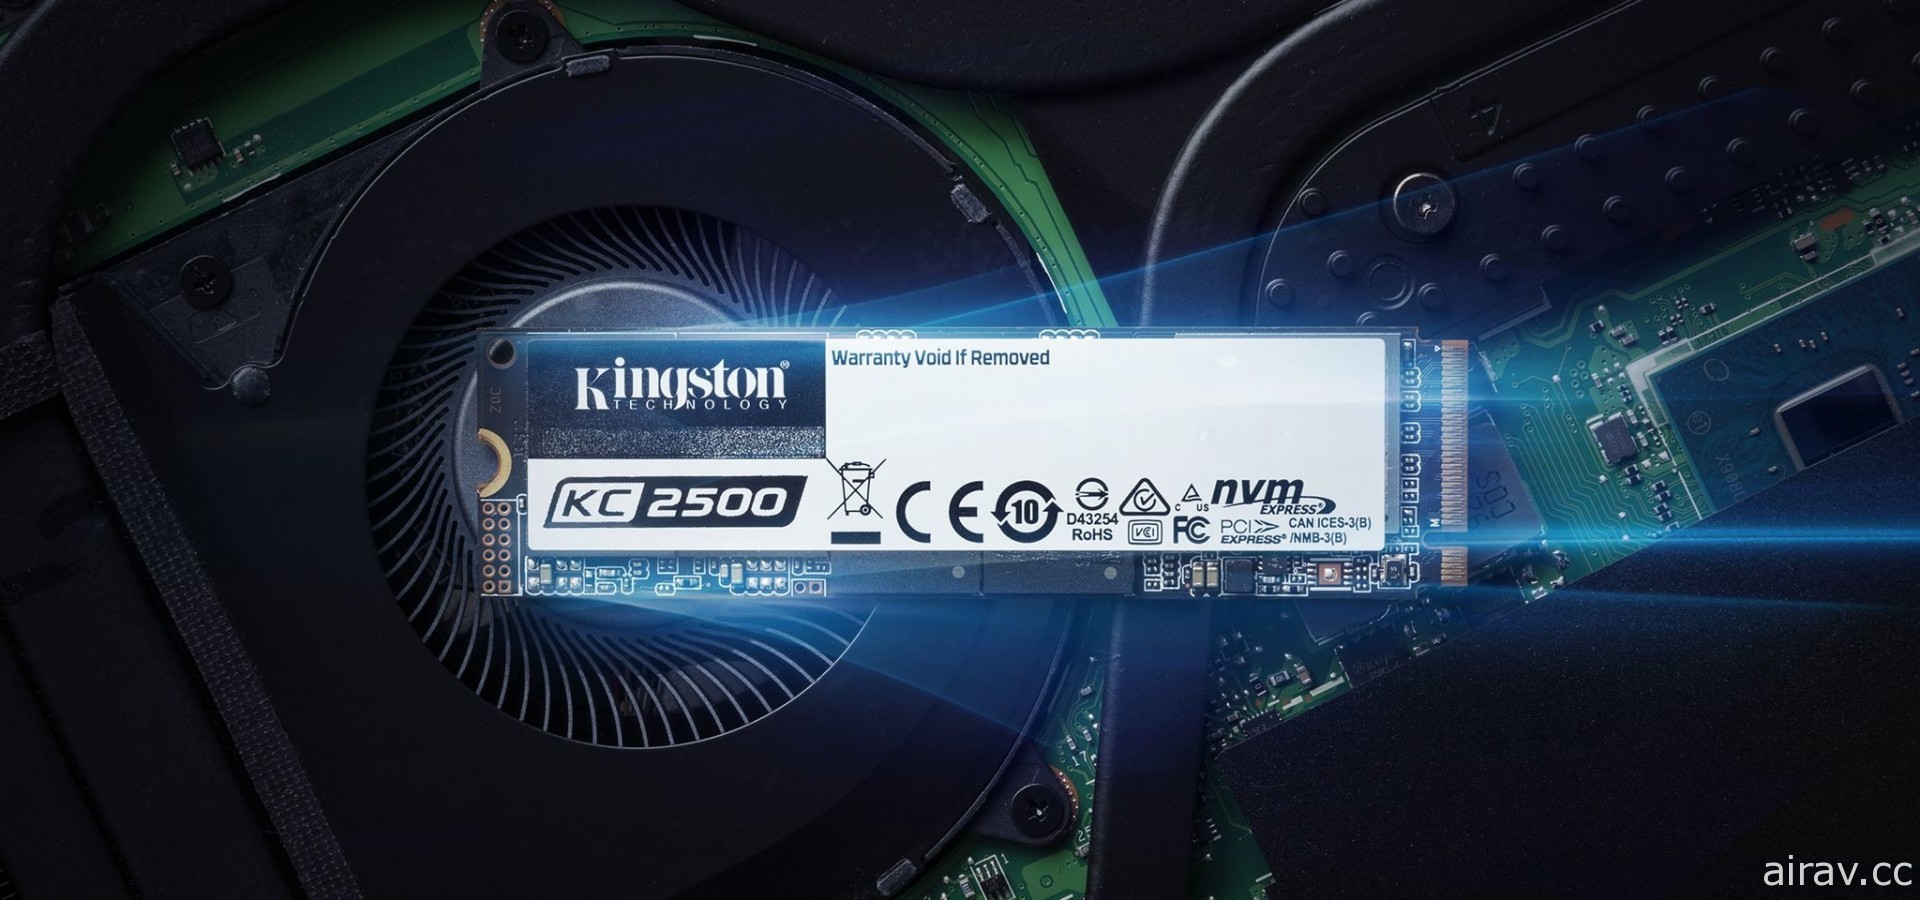 Kingston 金士頓推出新一代 KC2500 NVMe PCIe SSD 固態硬碟